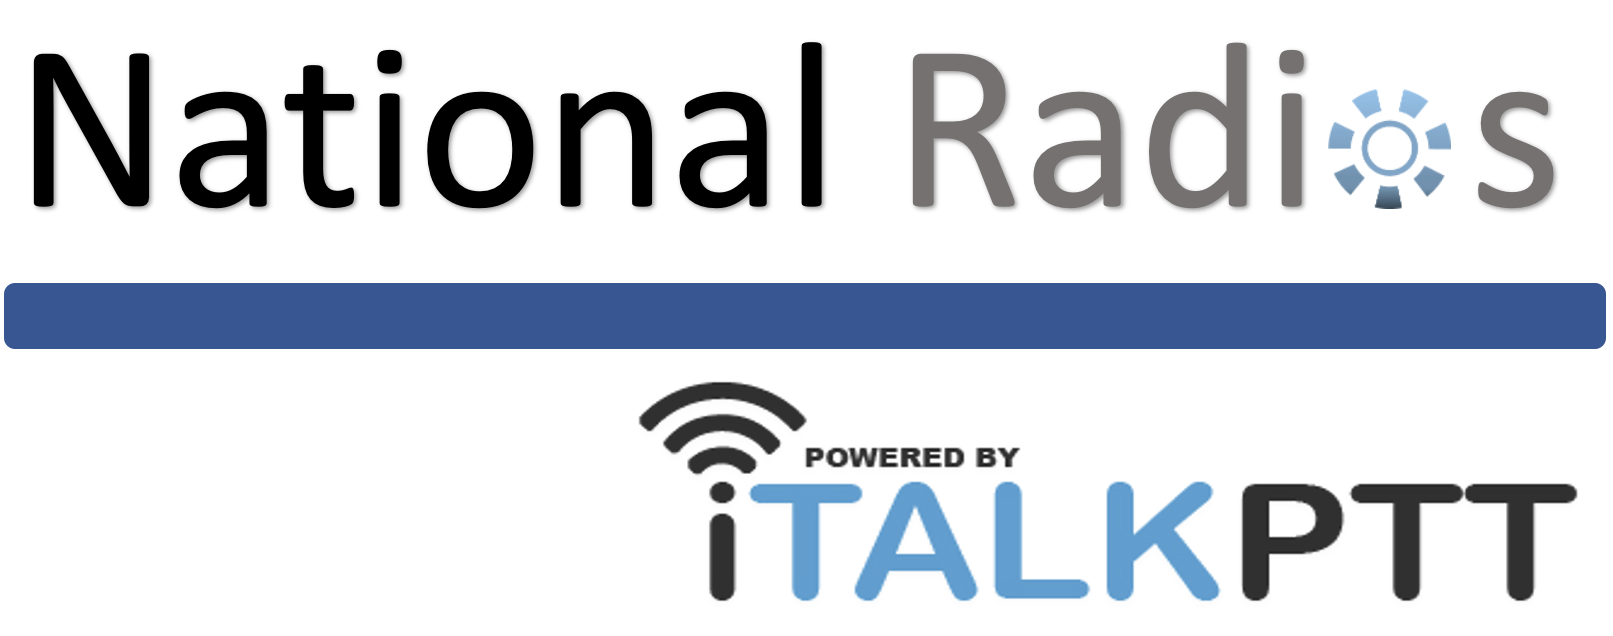 National Radios